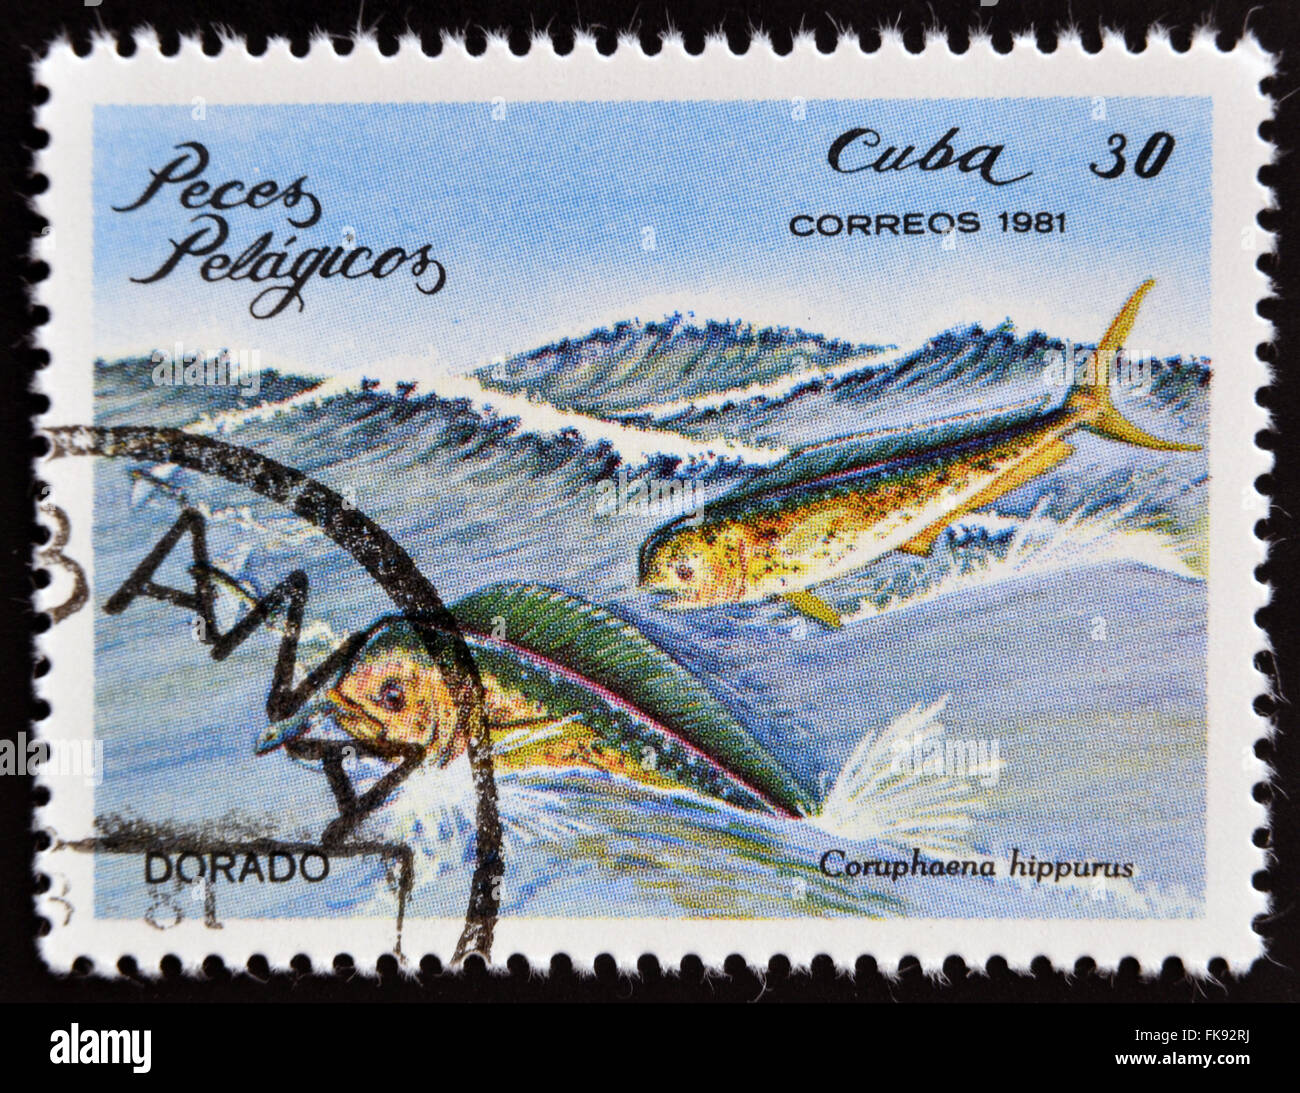 CUBA - CIRCA 1981: A Stamp printed in Cuba shows a Dorado with the inscription 'Coryphaena hippurus' Stock Photo